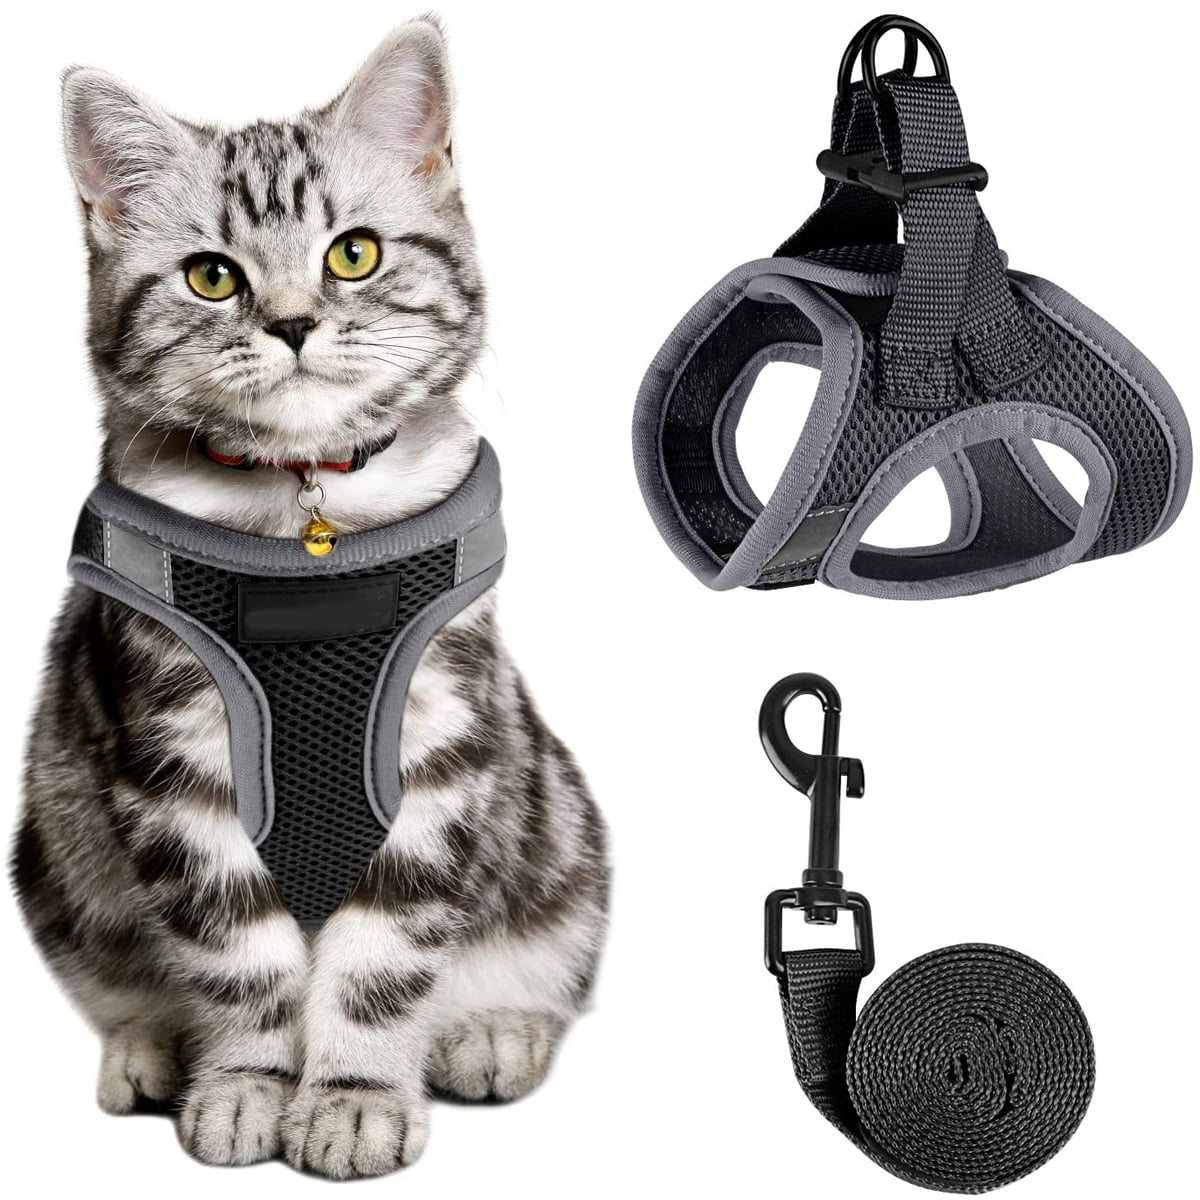 Yizhi Miaow Cat Harness and Leash for Walking Escape Proof Stylish Cat Jacket Black Plaid Adjustable Cat Walking Vest Harness Medium